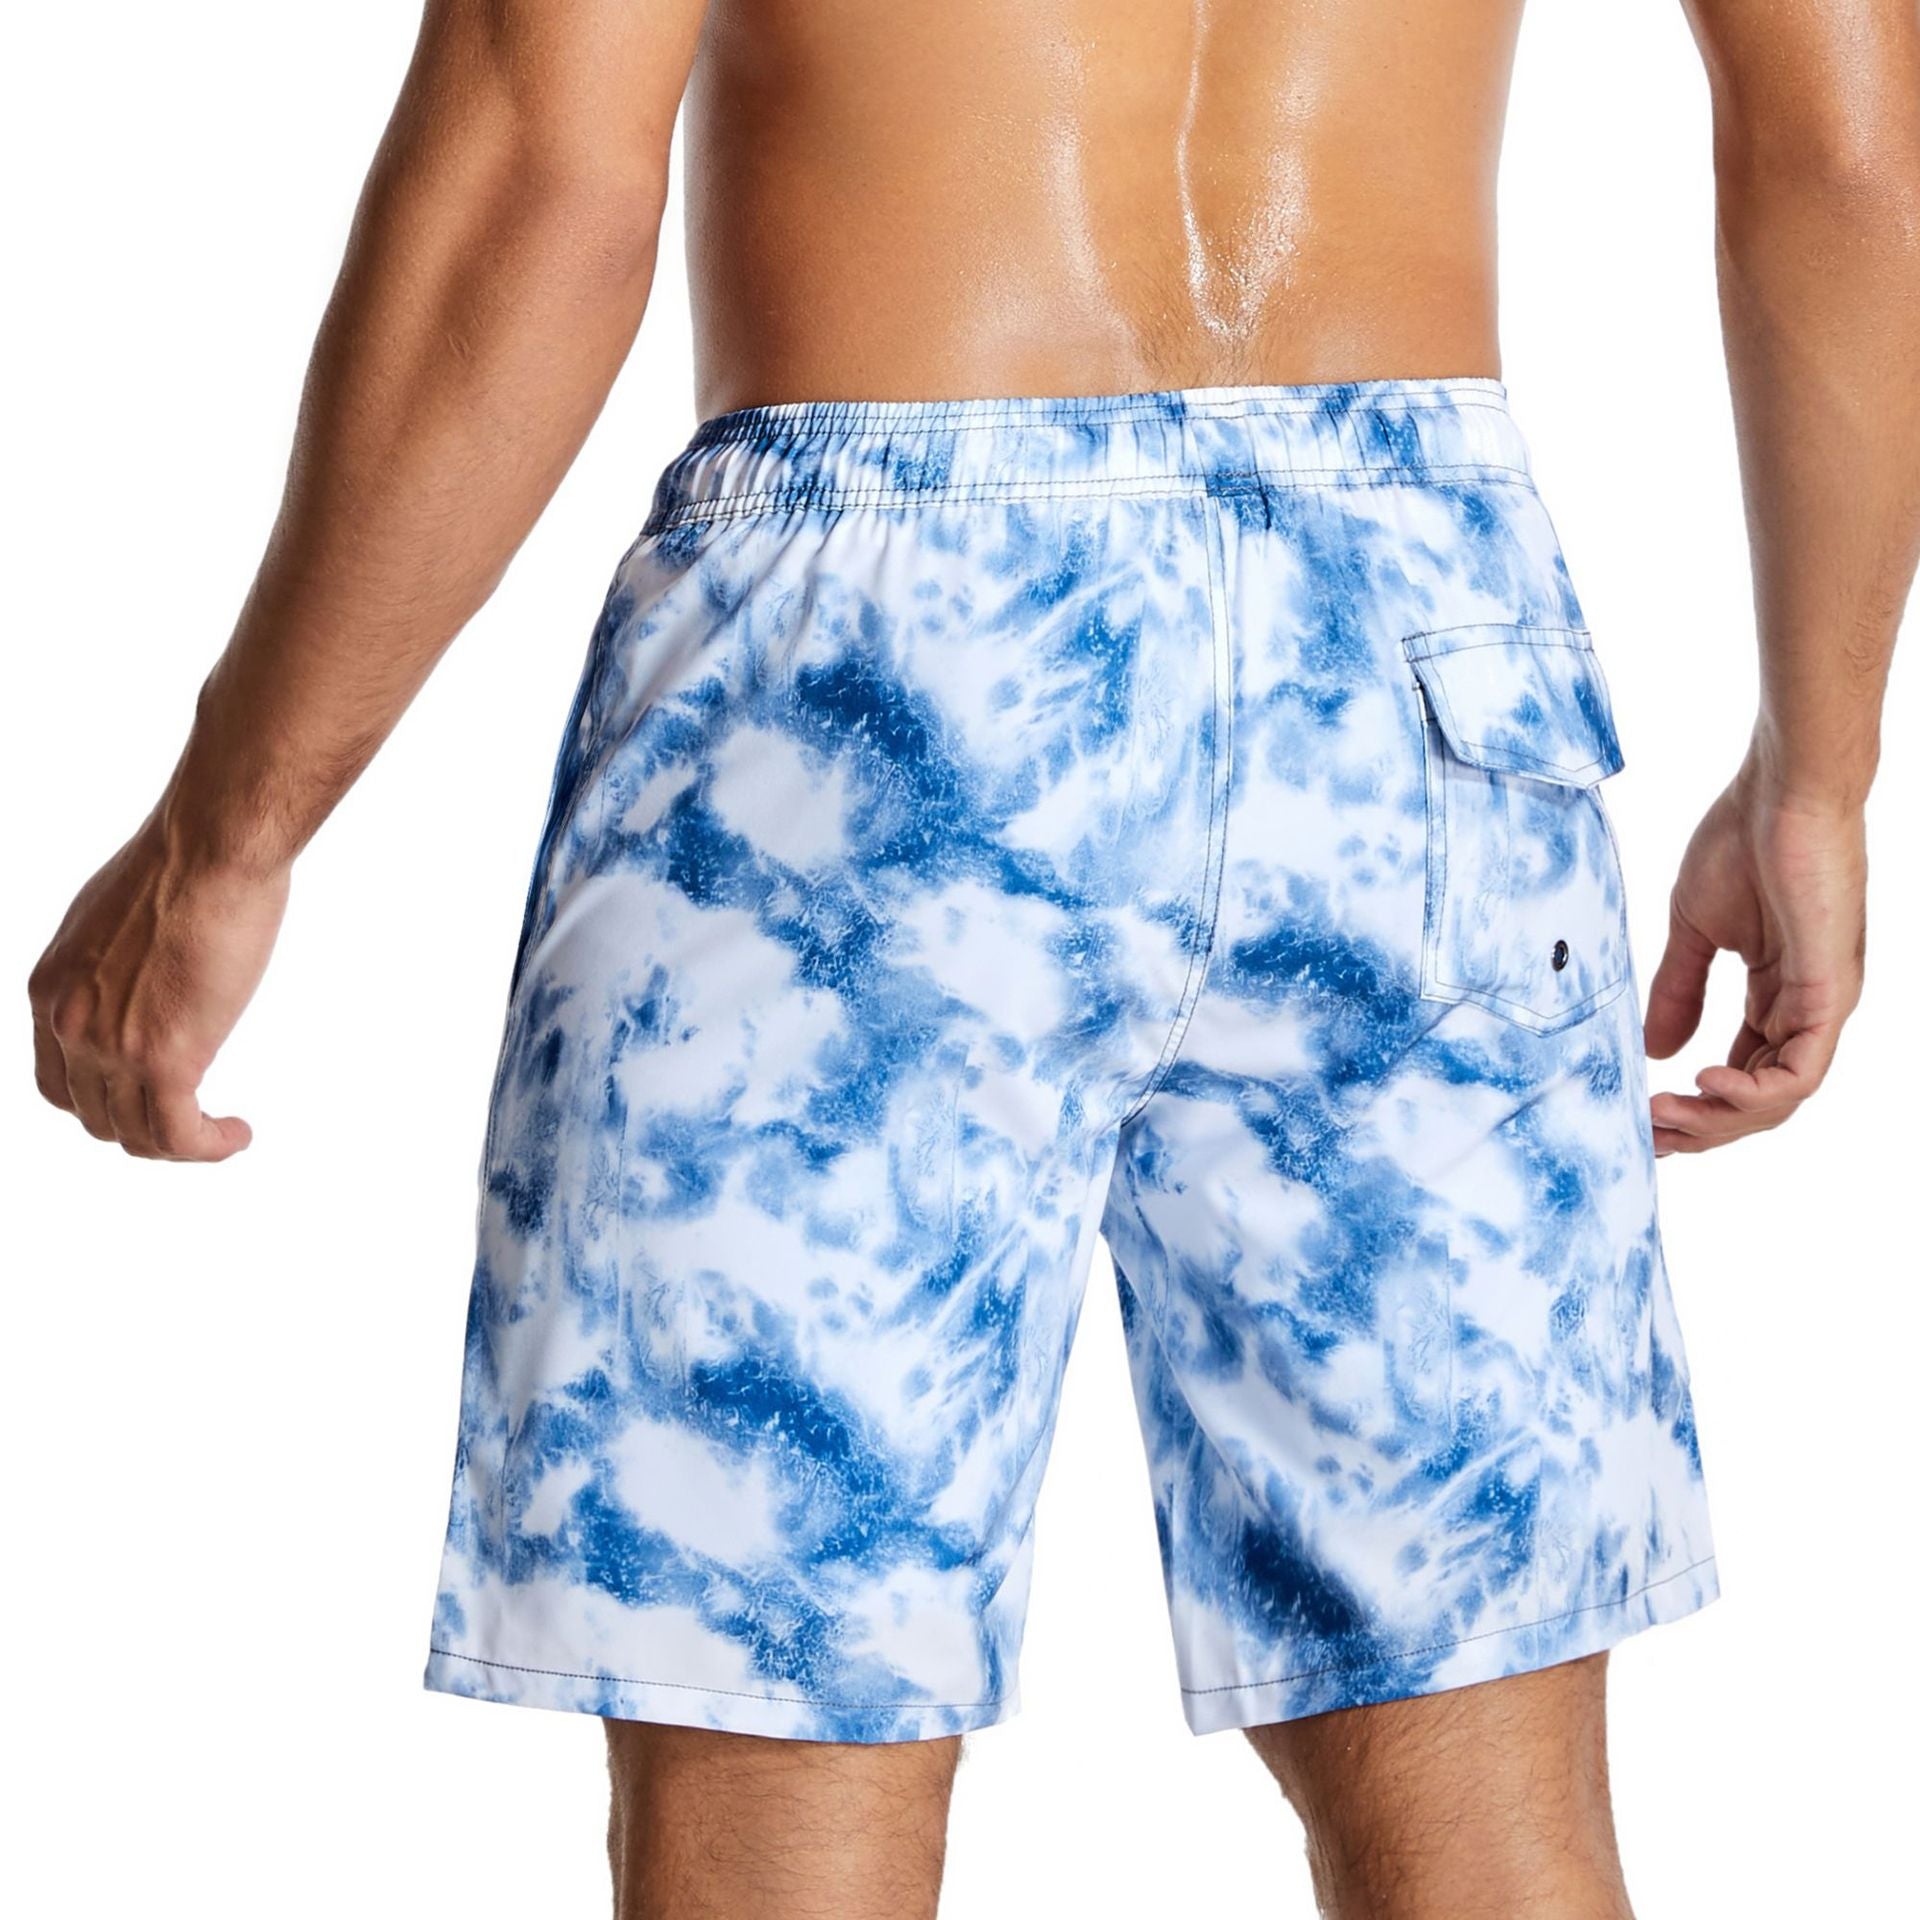 Men's Swim Trunks with Compression Liner Quick Dry 7" Inseam Swimsuit Swimwear - Cloud